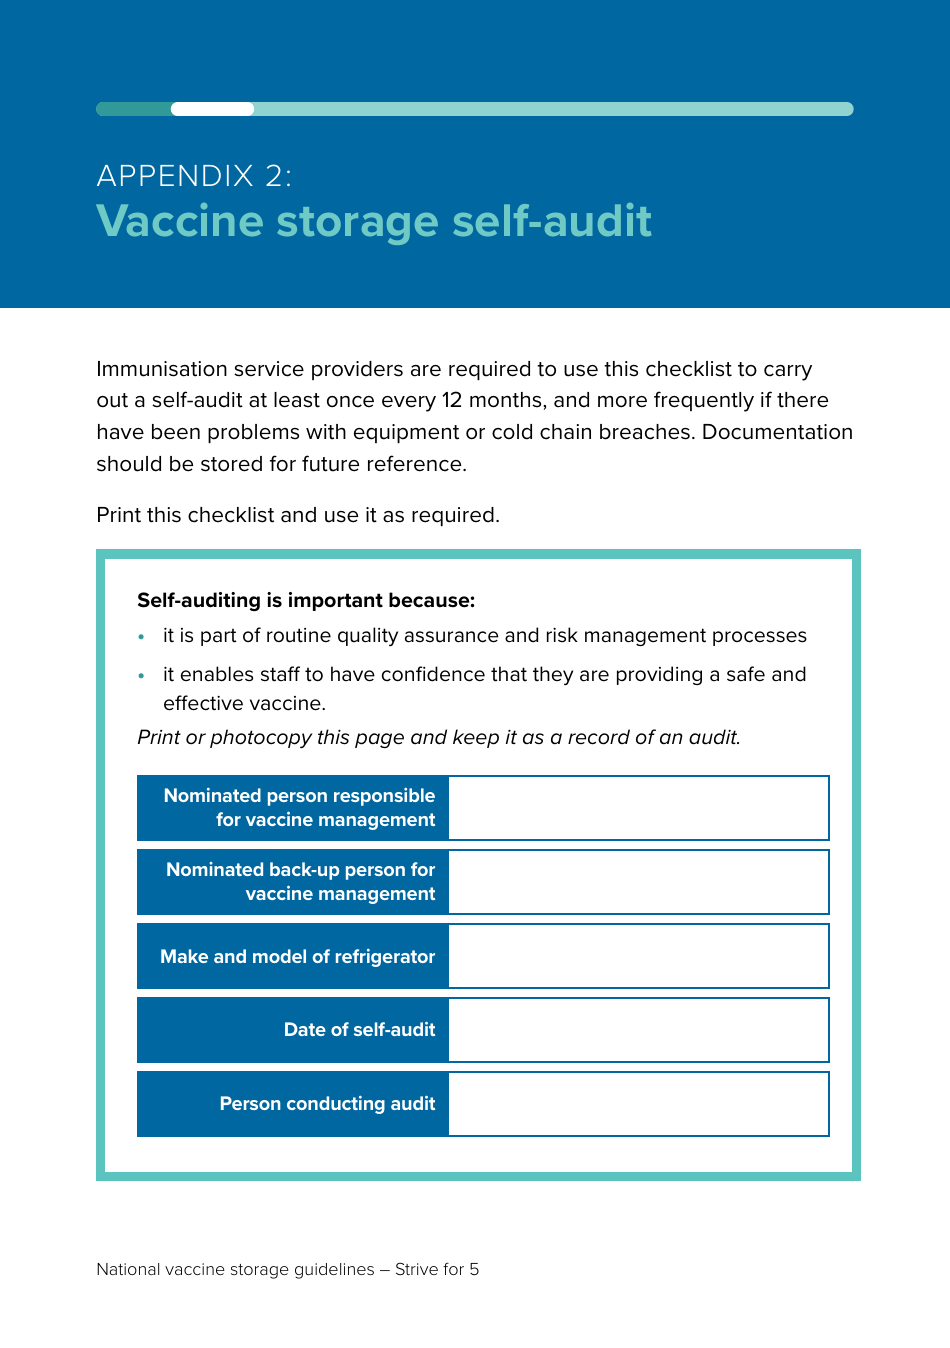 Appendix 2 Vaccine Storage Self-audit - Australia, Page 1